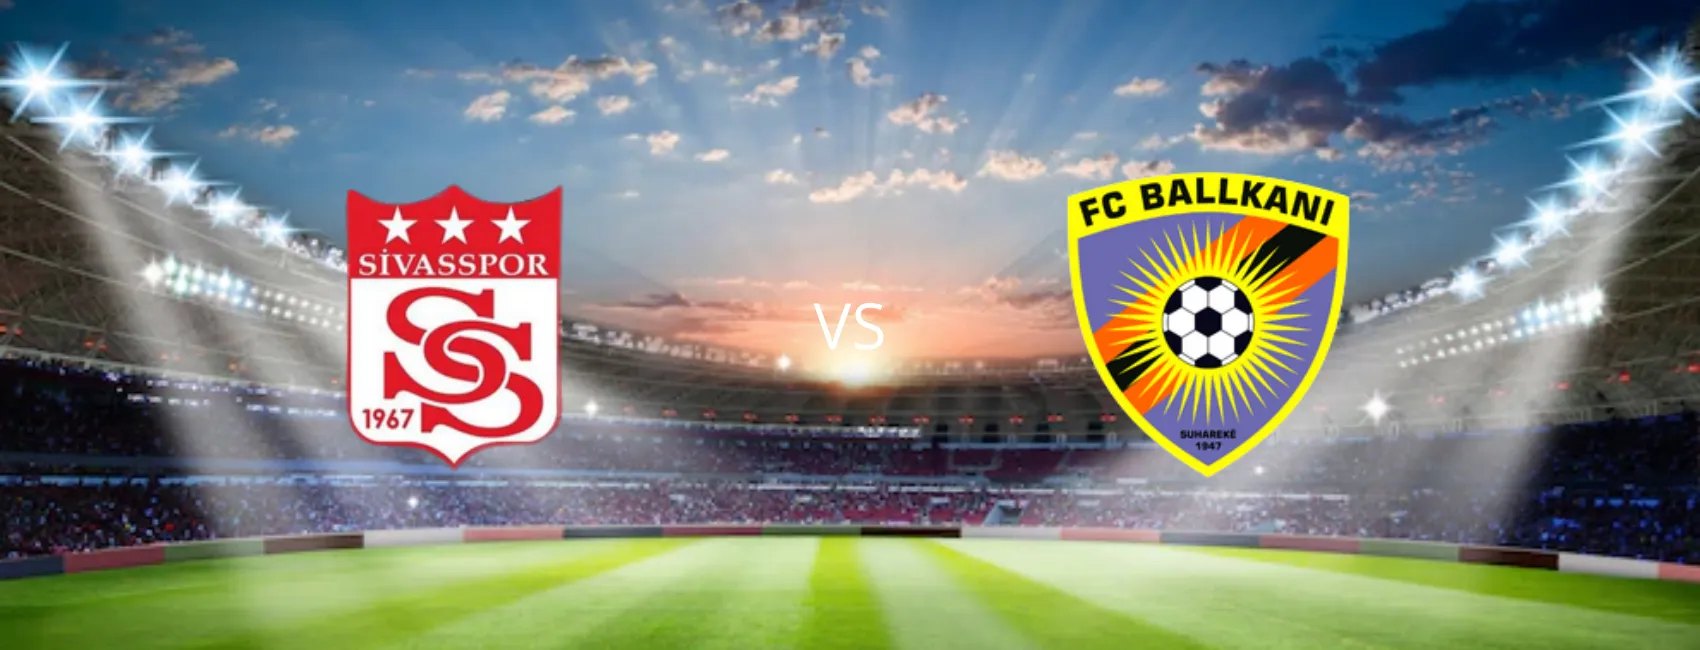 Video Clip Highlights: Sivasspor vs KF Ballkani – C3 CHÂU ÂU